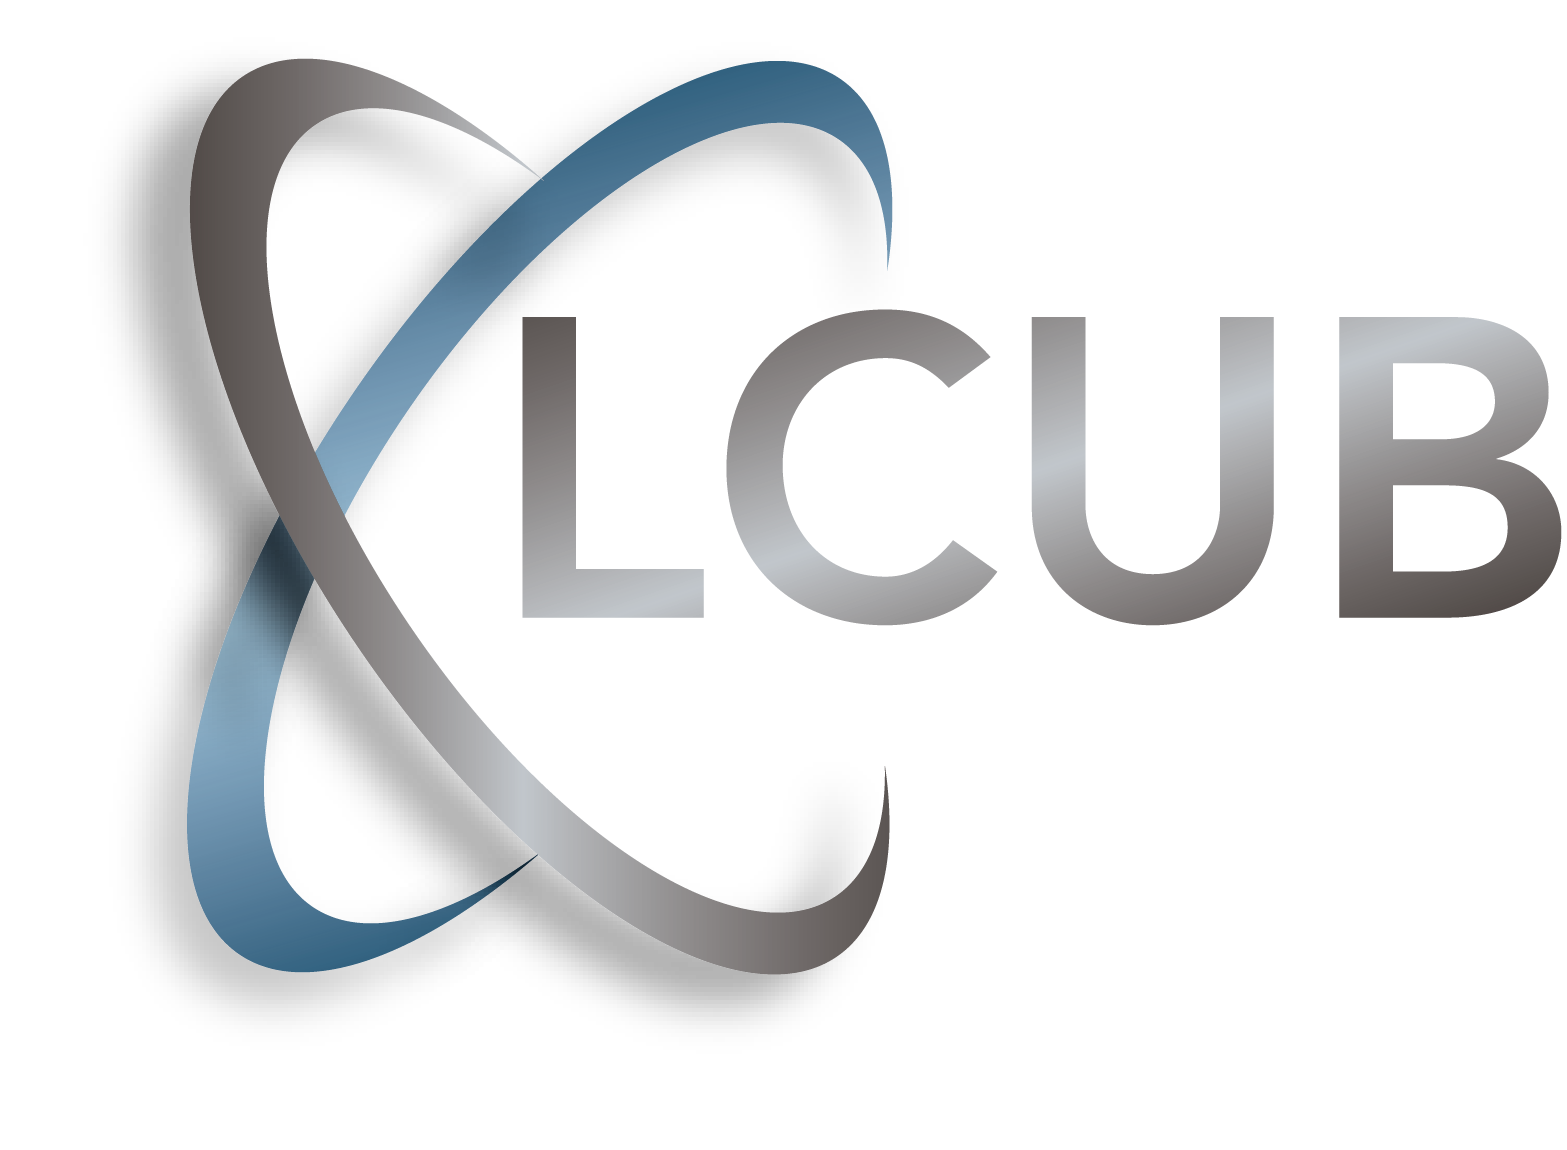 Organization logo of Lenoir City Utilities Board